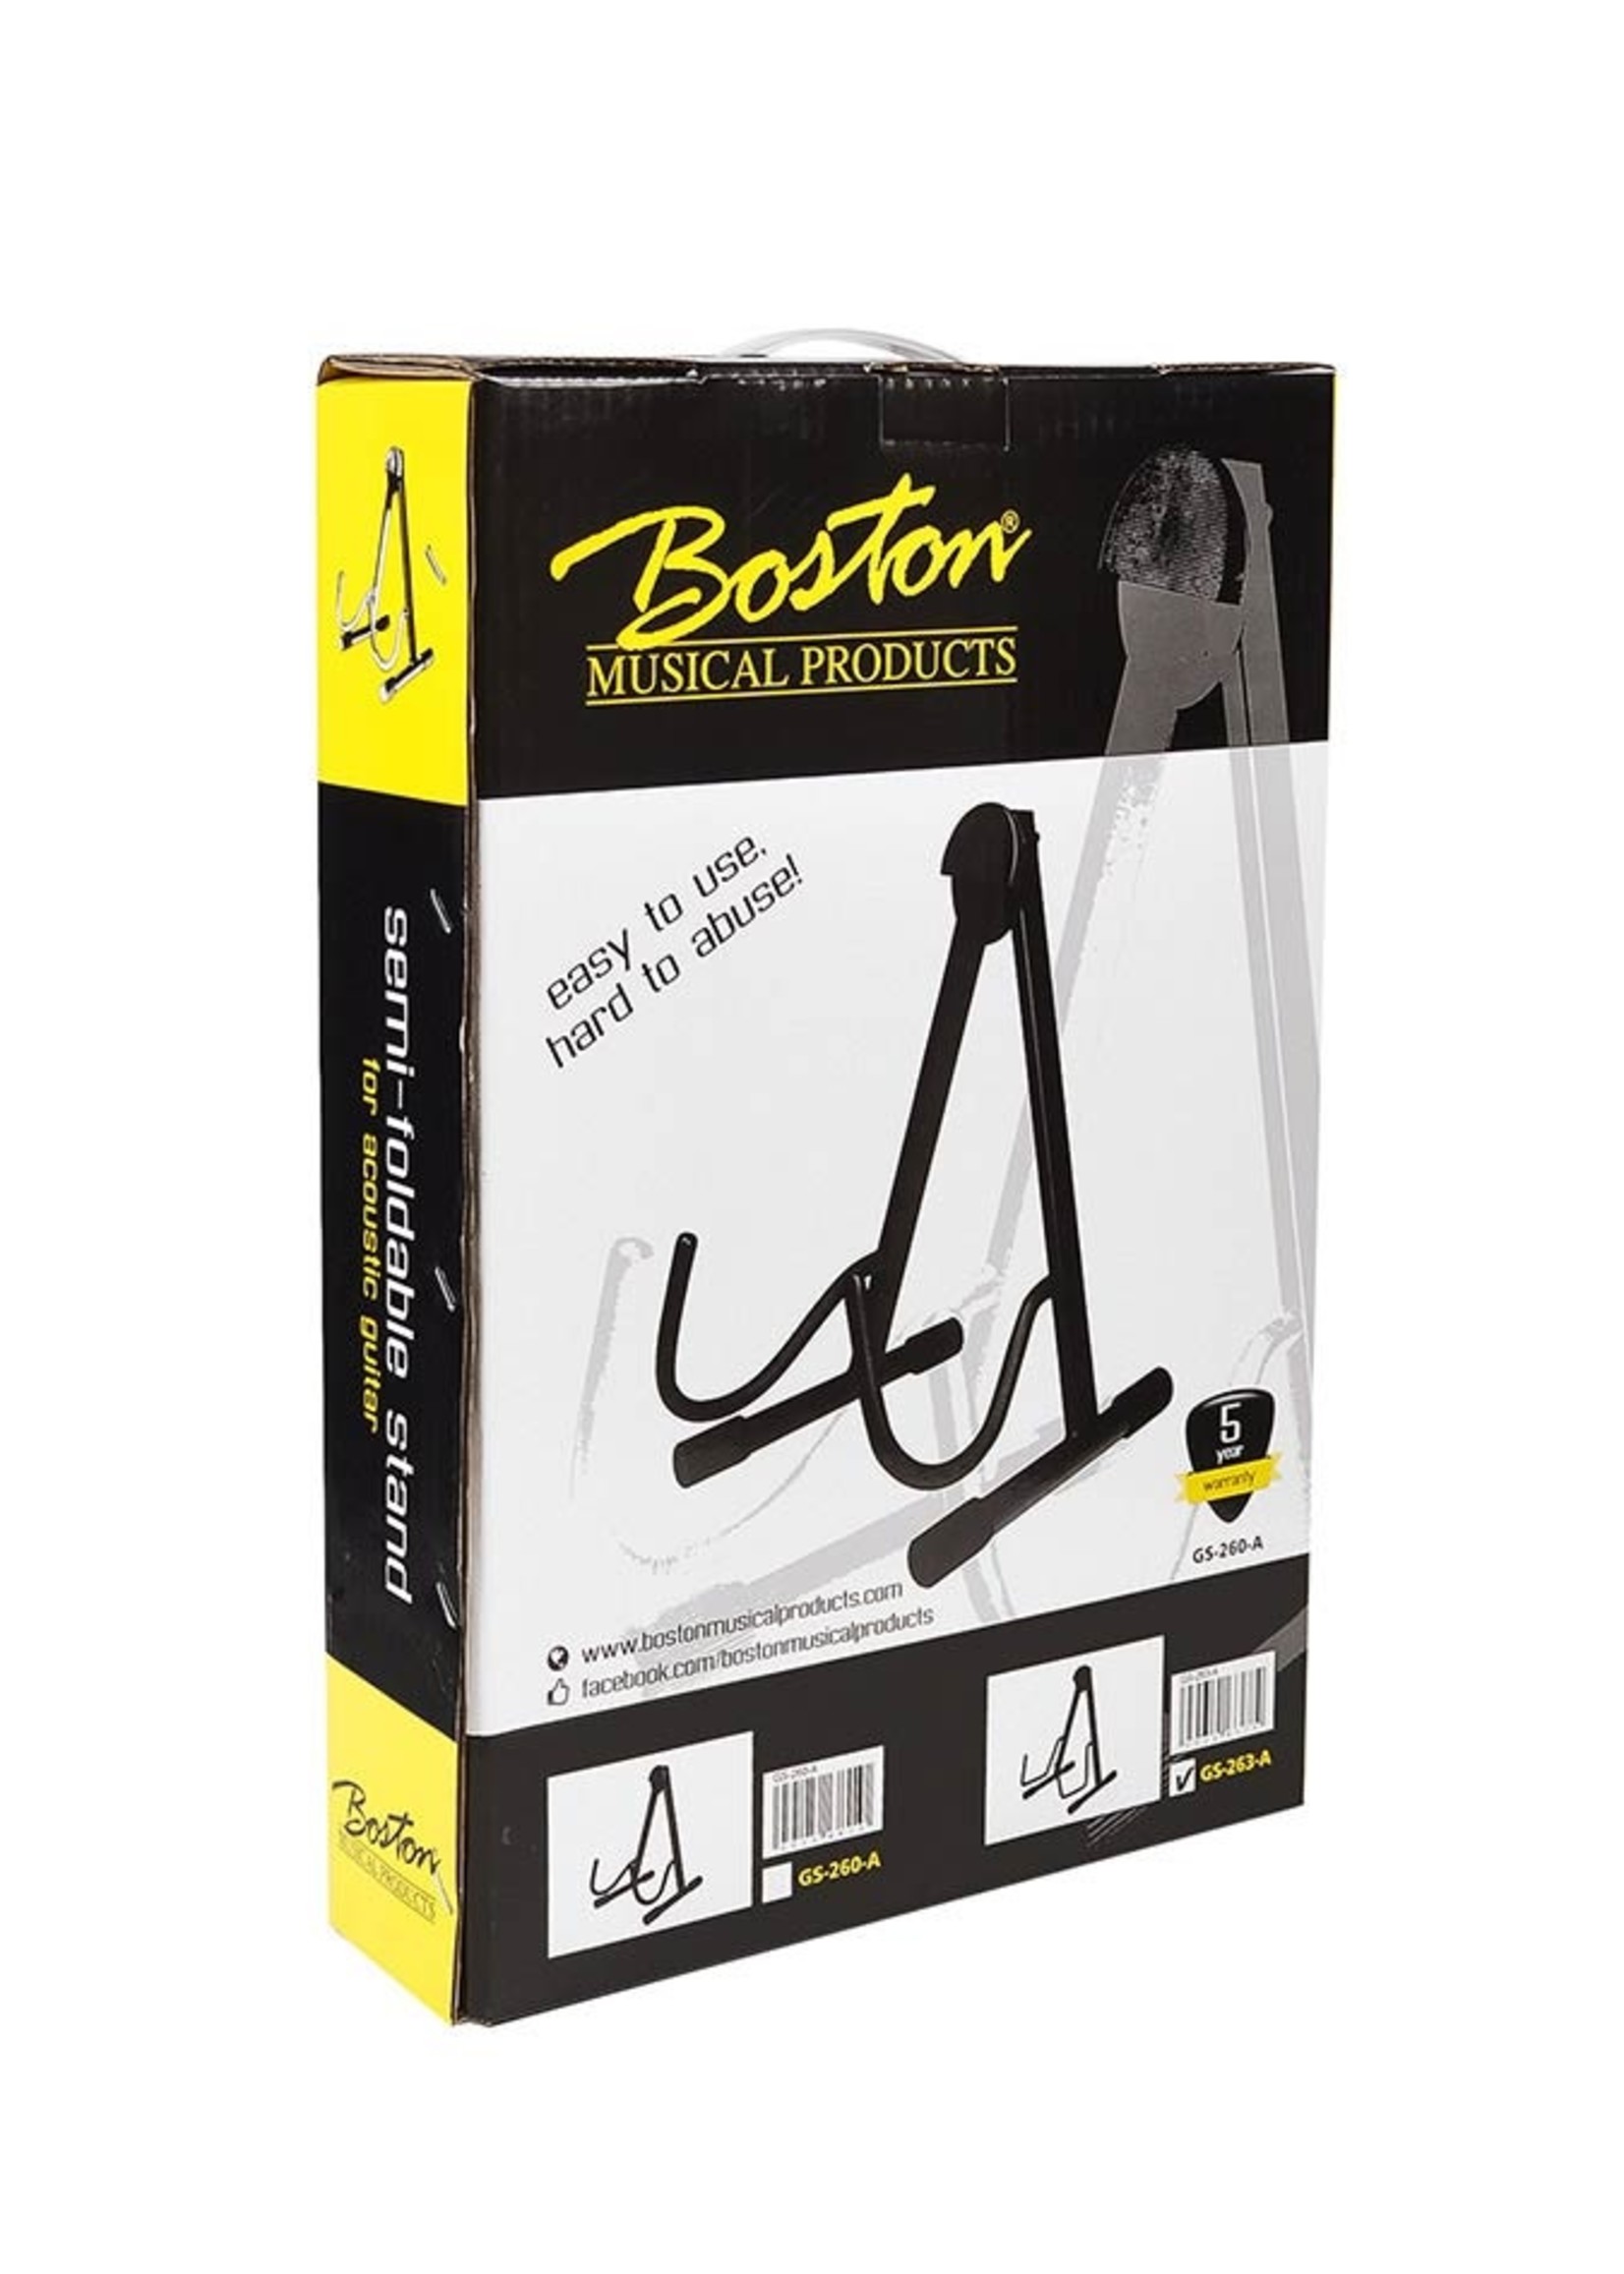 Boston Boston GS-260-A A-stand Acoustic